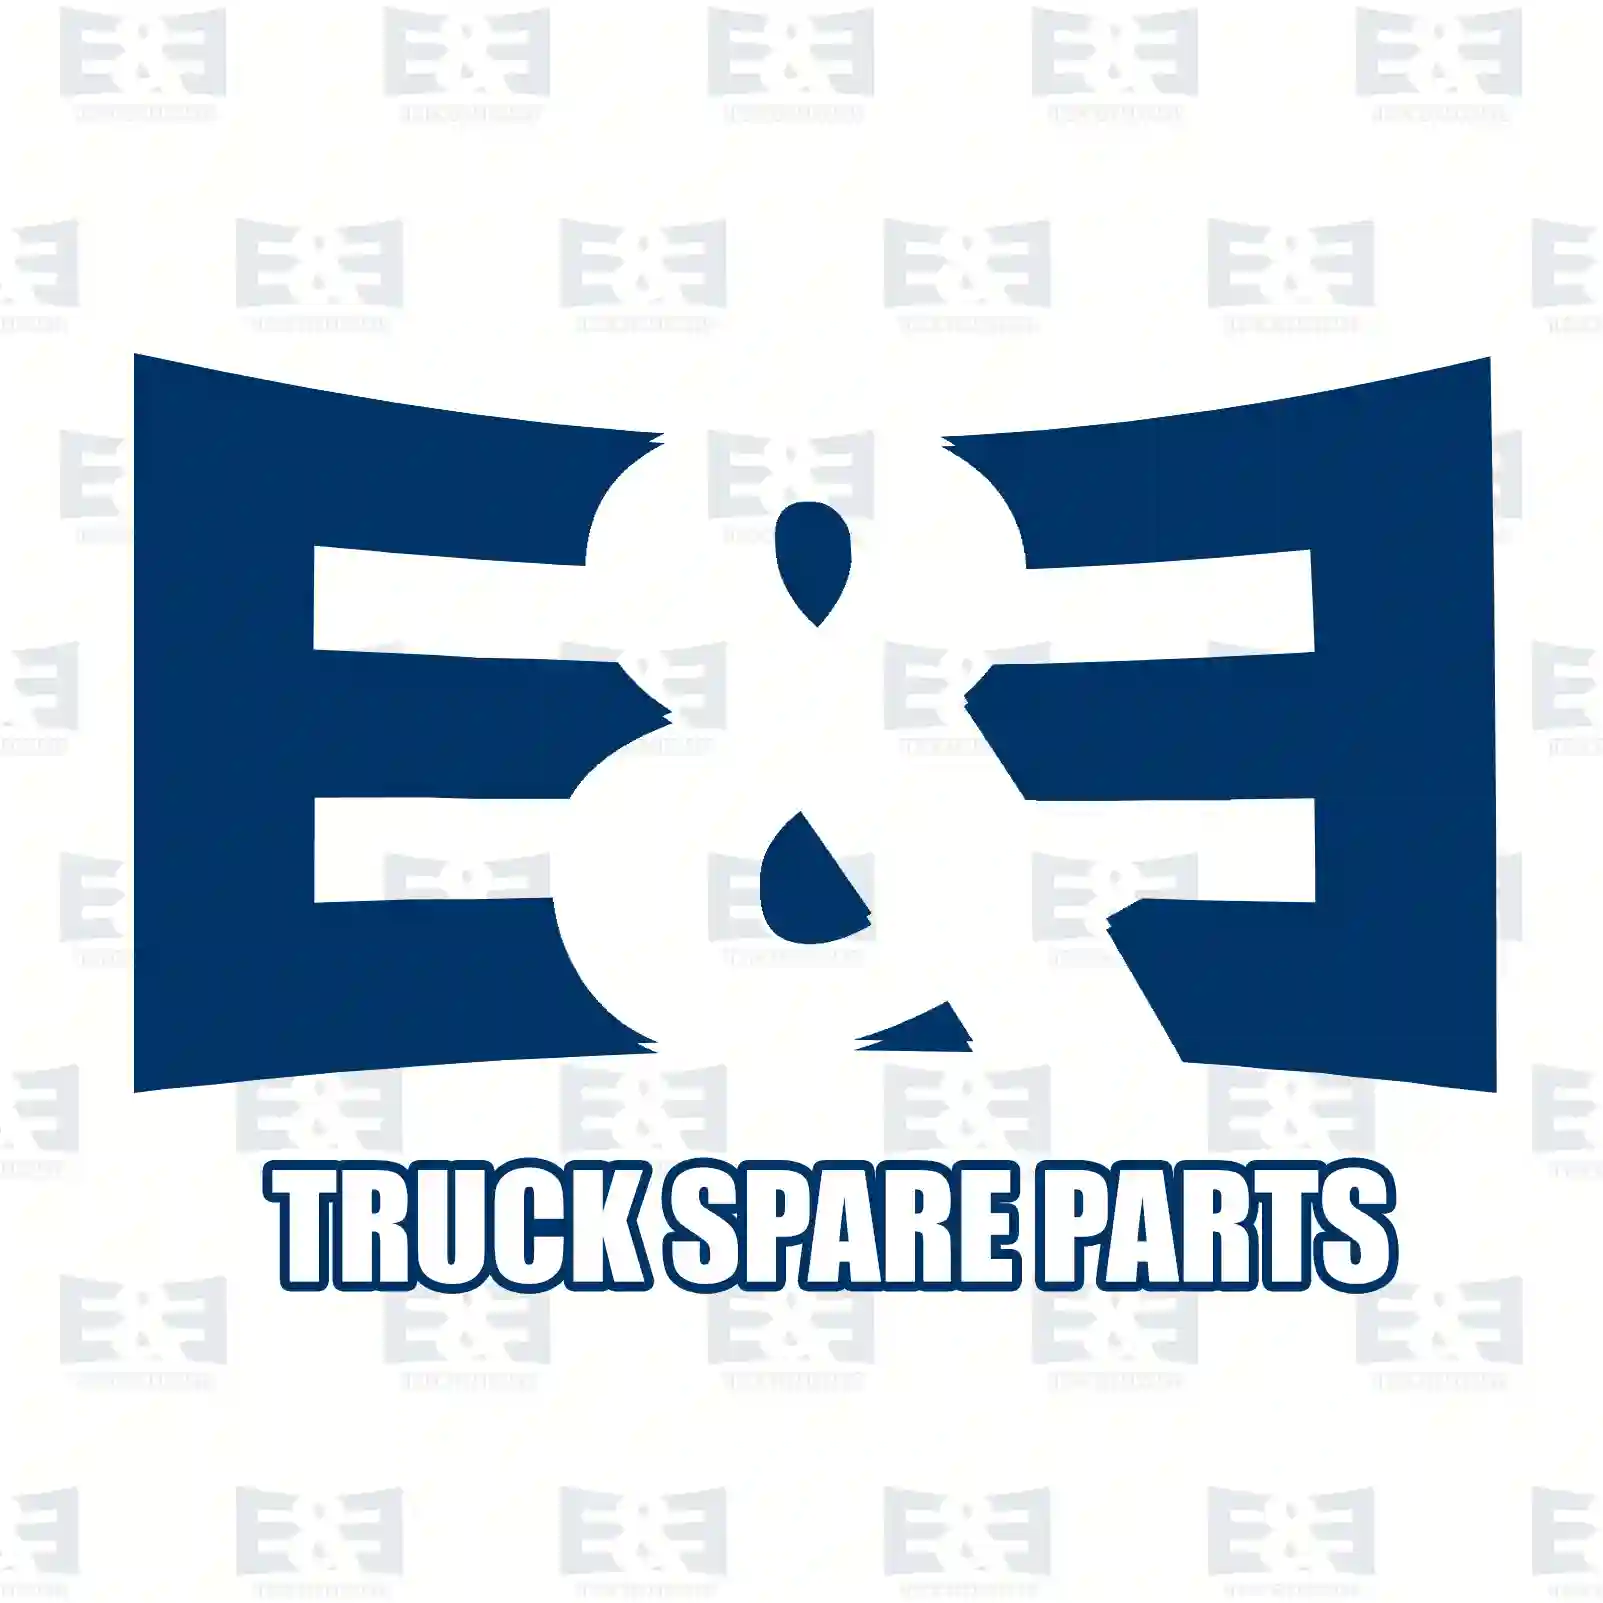 Drum brake lining kit, axle kit - oversize, 2E2293392, 1535254, 1535254S, 551129, 551167 ||  2E2293392 E&E Truck Spare Parts | Truck Spare Parts, Auotomotive Spare Parts Drum brake lining kit, axle kit - oversize, 2E2293392, 1535254, 1535254S, 551129, 551167 ||  2E2293392 E&E Truck Spare Parts | Truck Spare Parts, Auotomotive Spare Parts